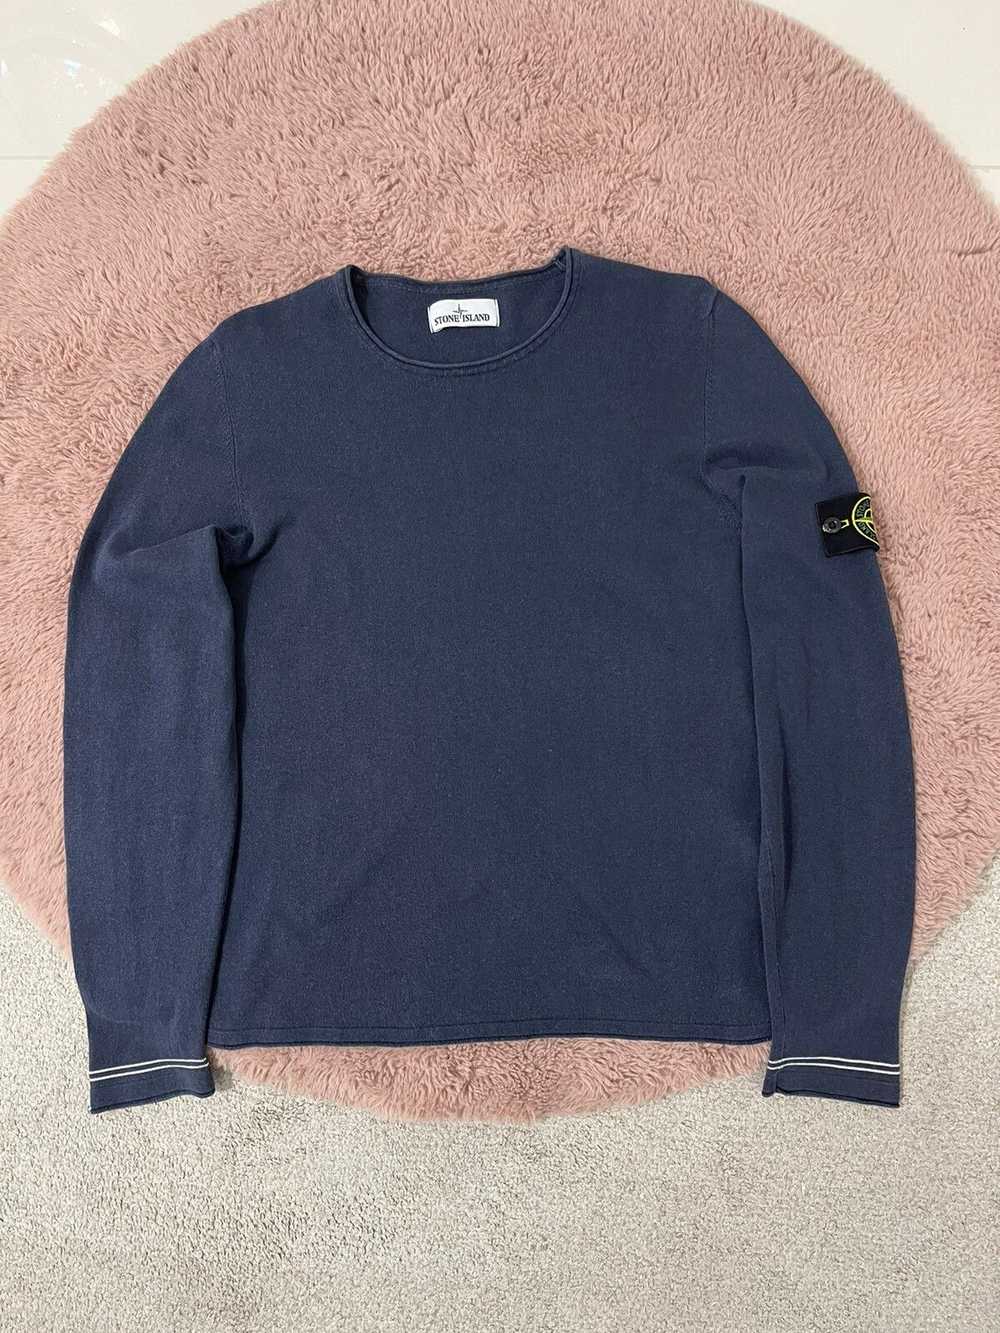 Stone Island stone Island garment dyed sweater (M) - image 2